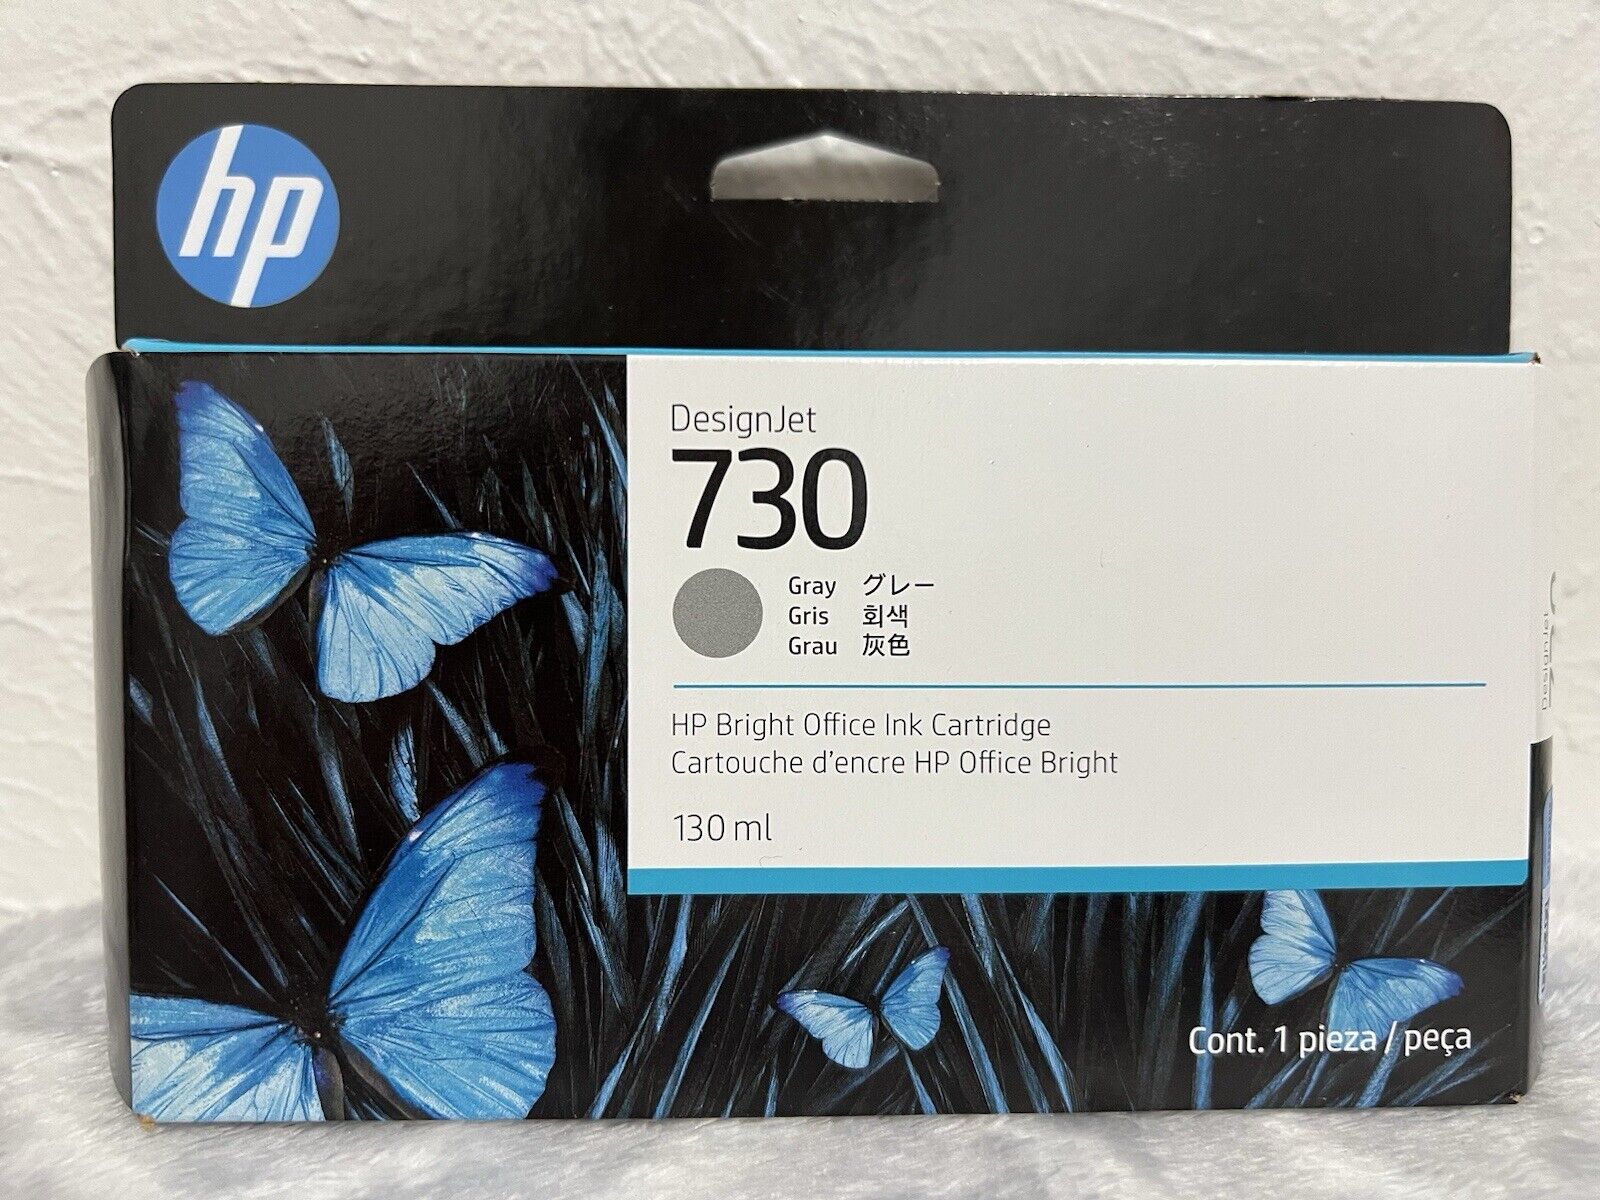 HP 730 Design Jet Ink Cartridge Gray P2V66A EXP 2026 T1600 T1700 T2600 NIB